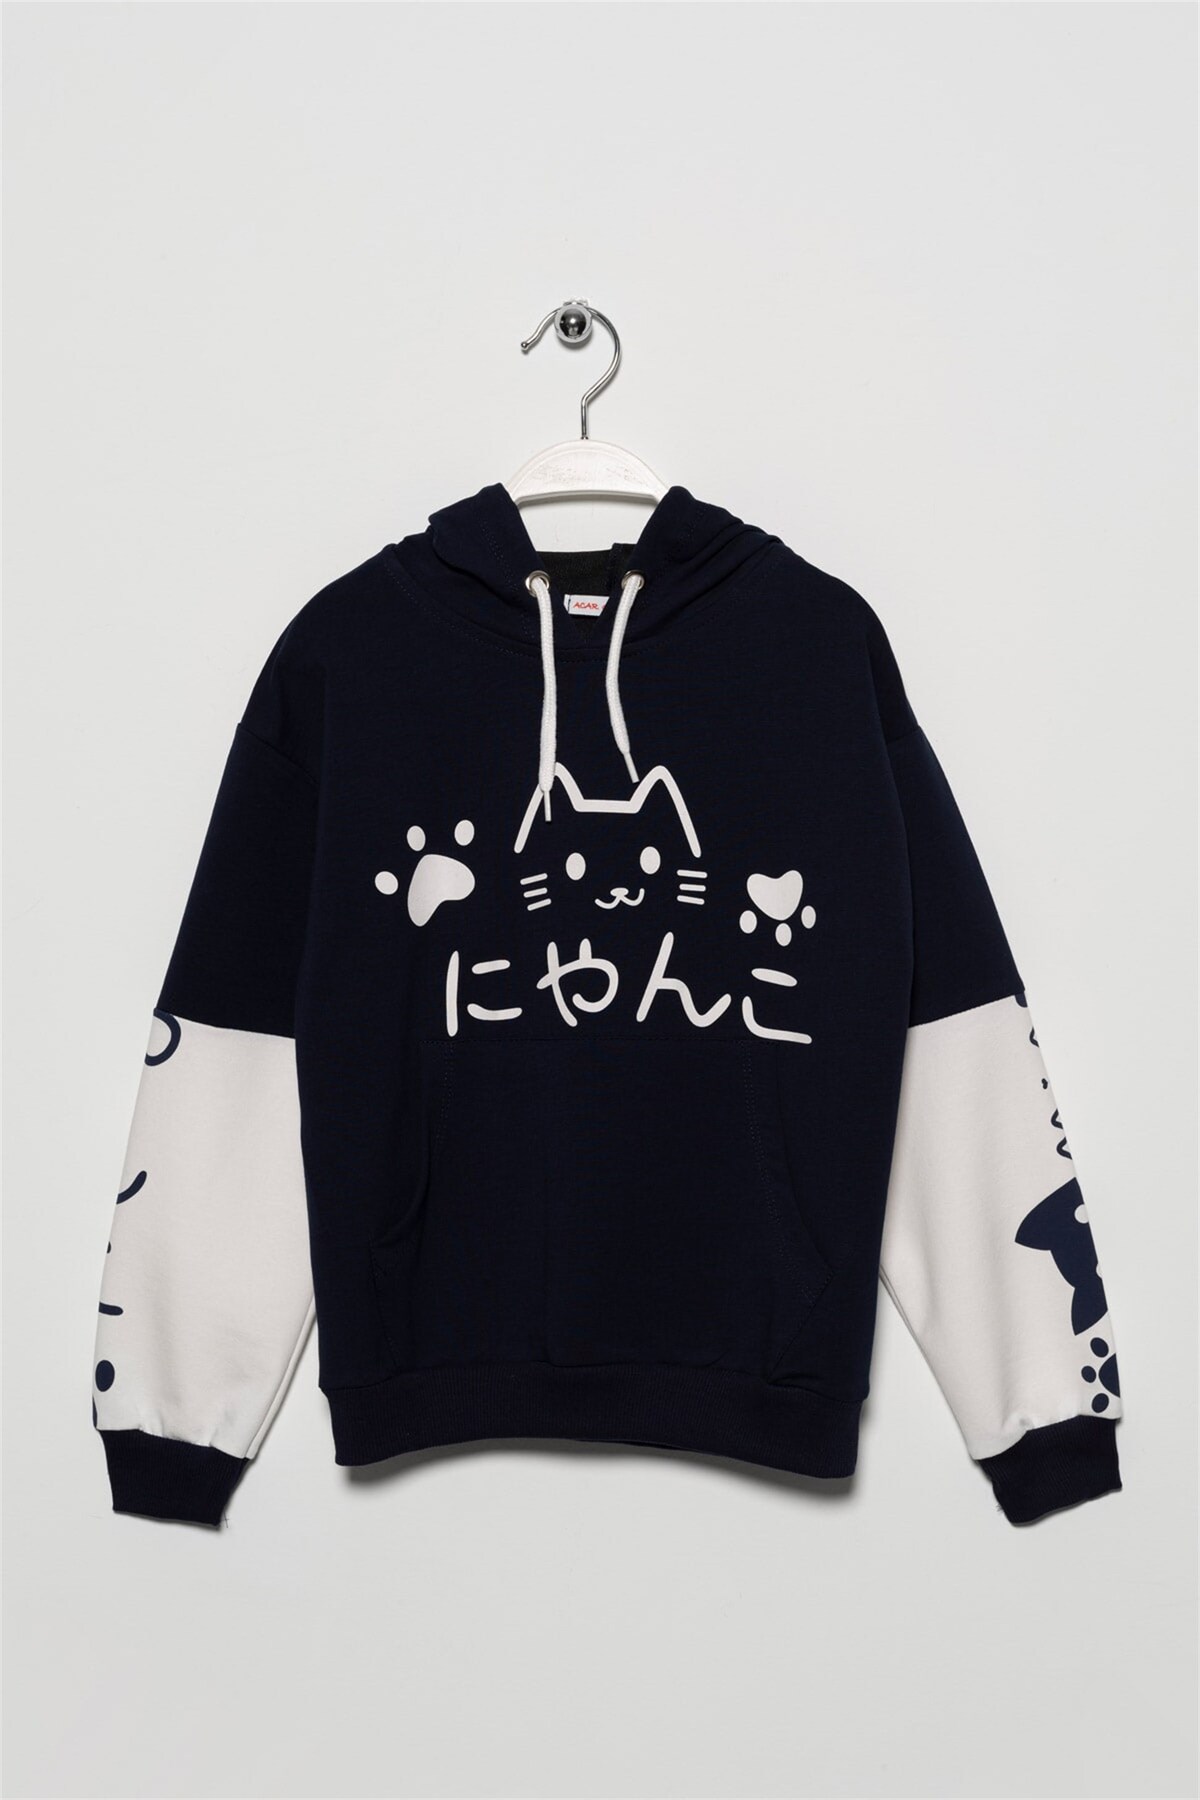 Zepkids Girls' Navy Blue Color Cat Printed Kangaroo Pocket Sweatshirt.